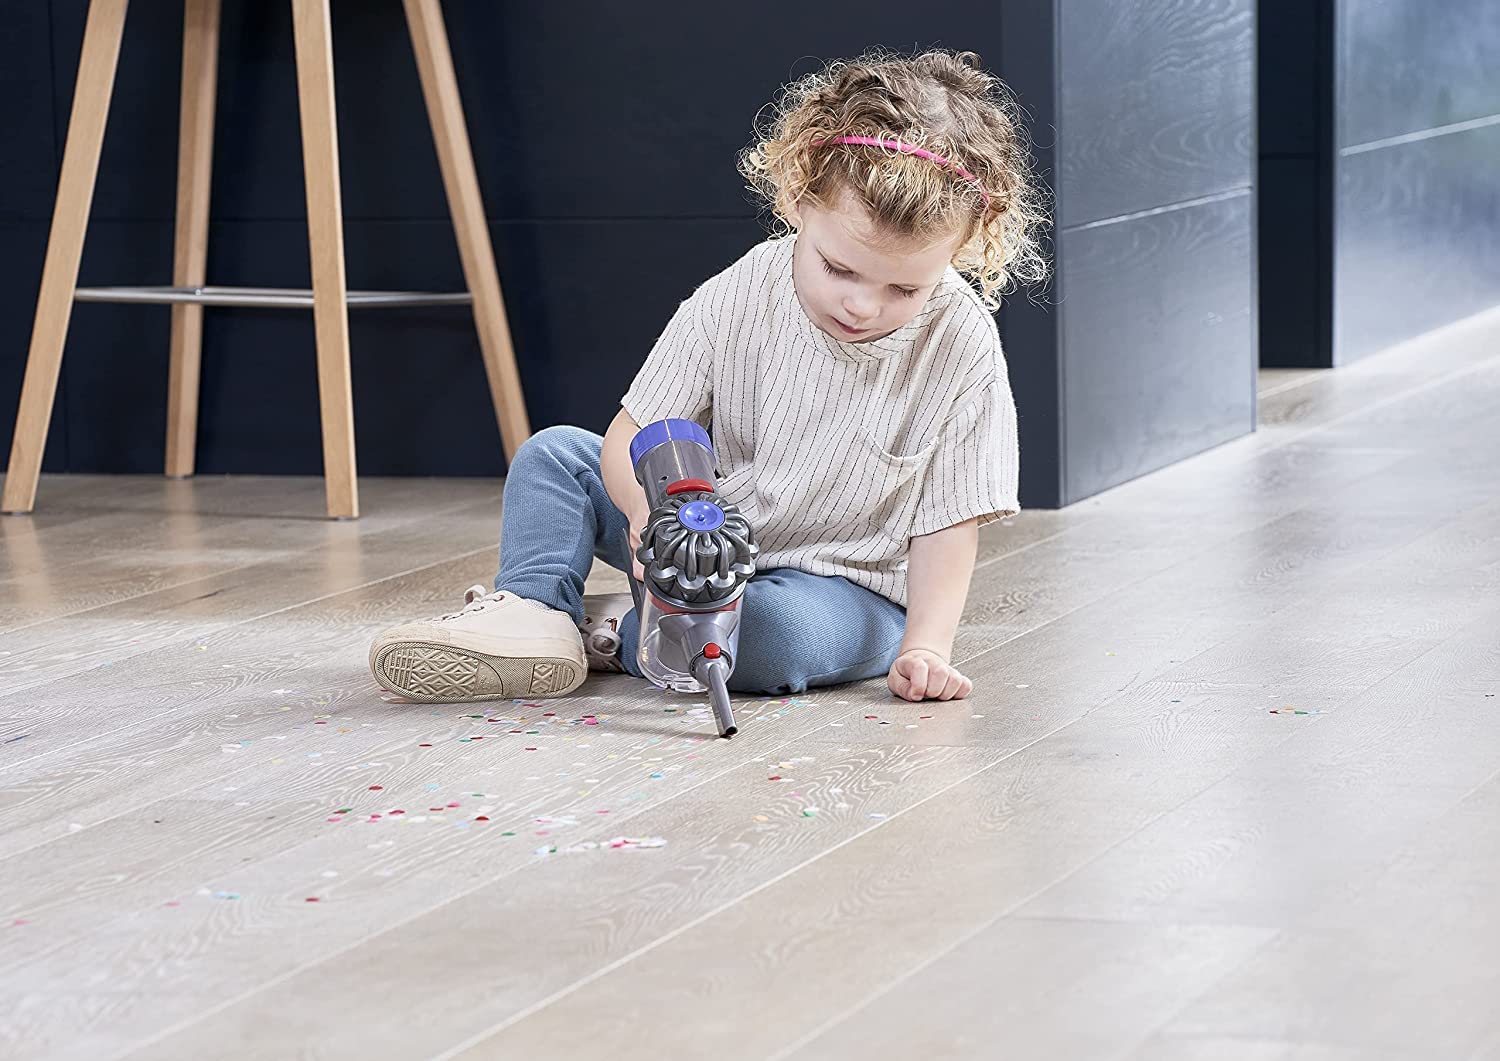 Casdon 68702 Dyson Cordless Vacuum Interactive Toy for Children Aged 3+, Purple and Orange